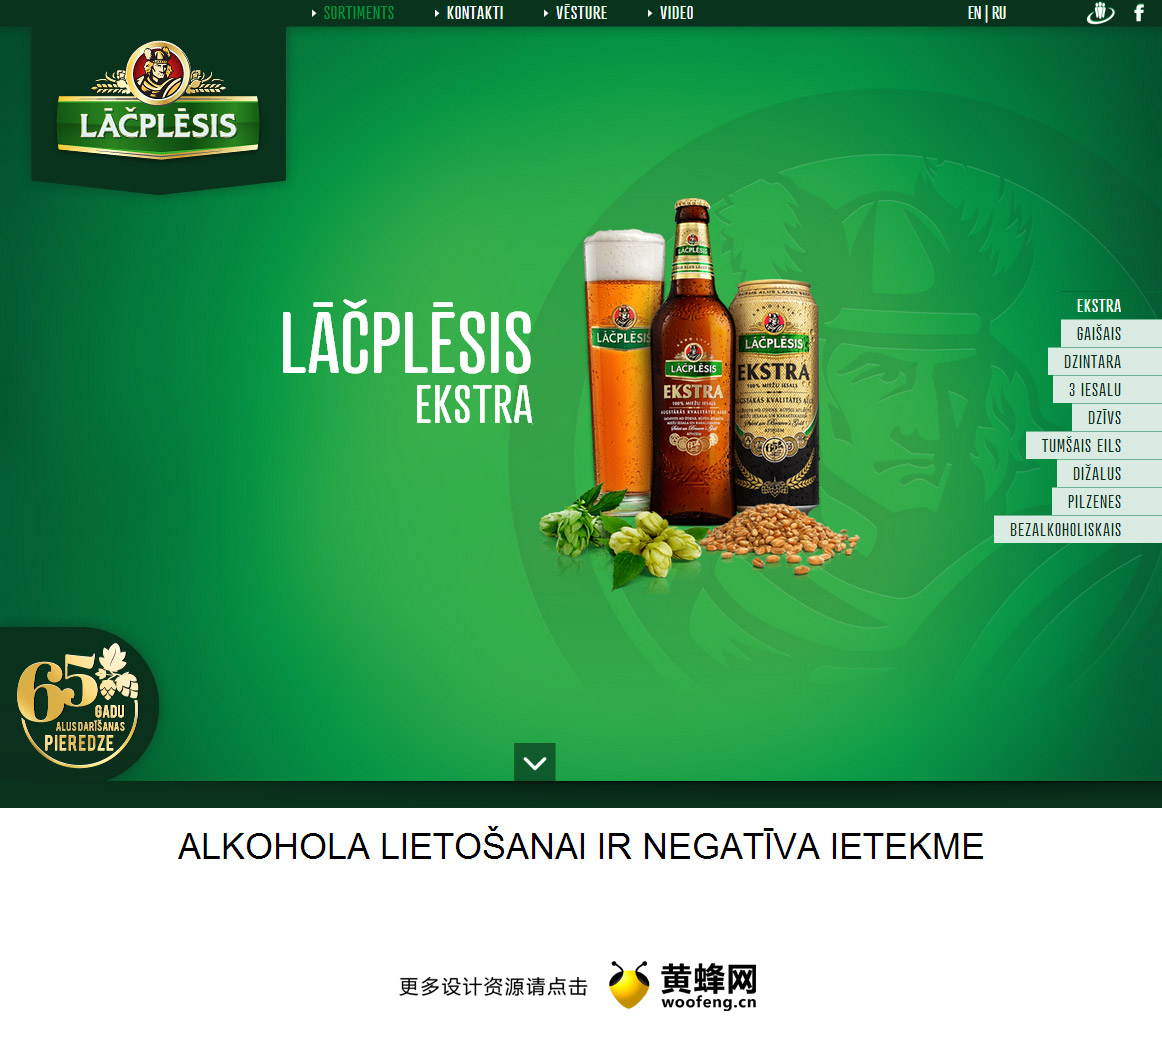 Lacplesisalus啤酒网站，来源自黄蜂网https://woofeng.cn/